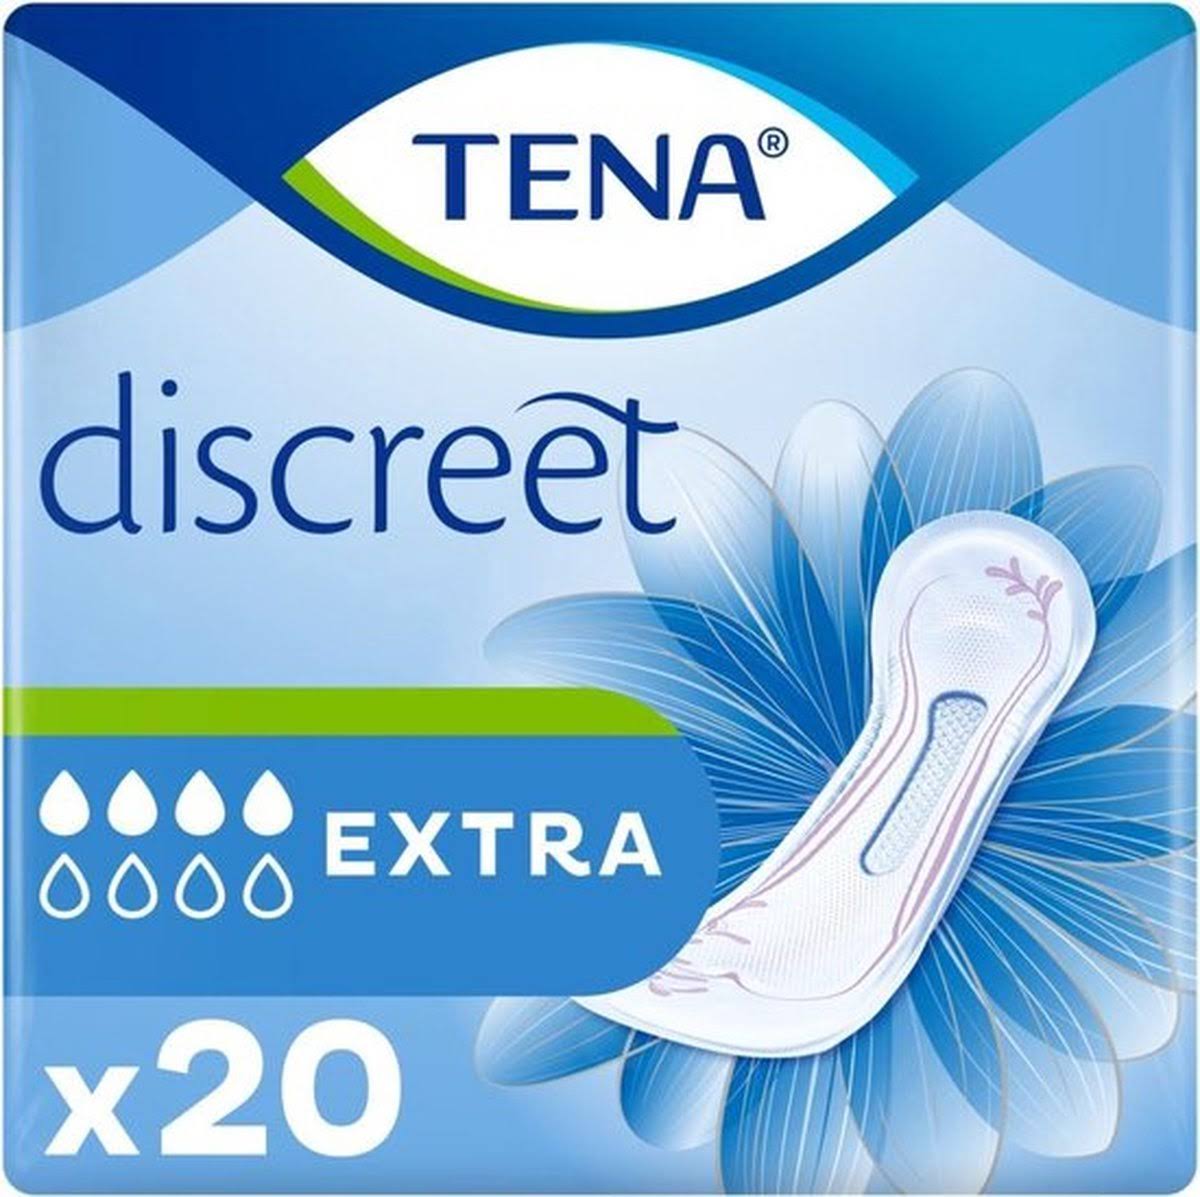 TENA Discreet Extra Pads+ - 3x Packs of 20 ( 60 Towels )